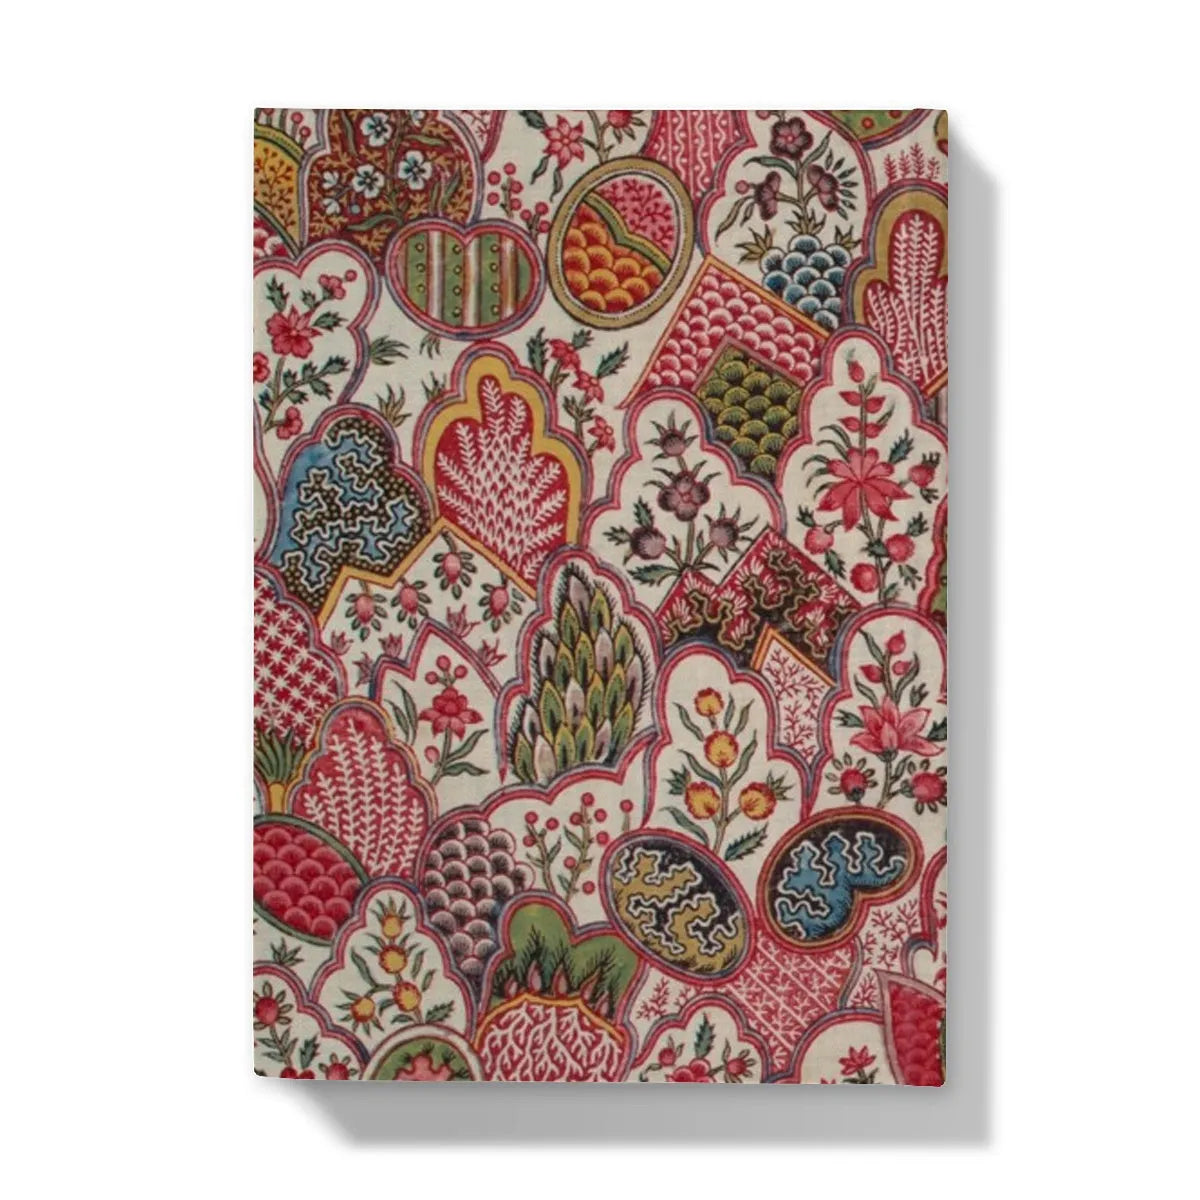 Vintage Floral Pattern Fabric Hardback Journal - Notebooks & Notepads - Aesthetic Art